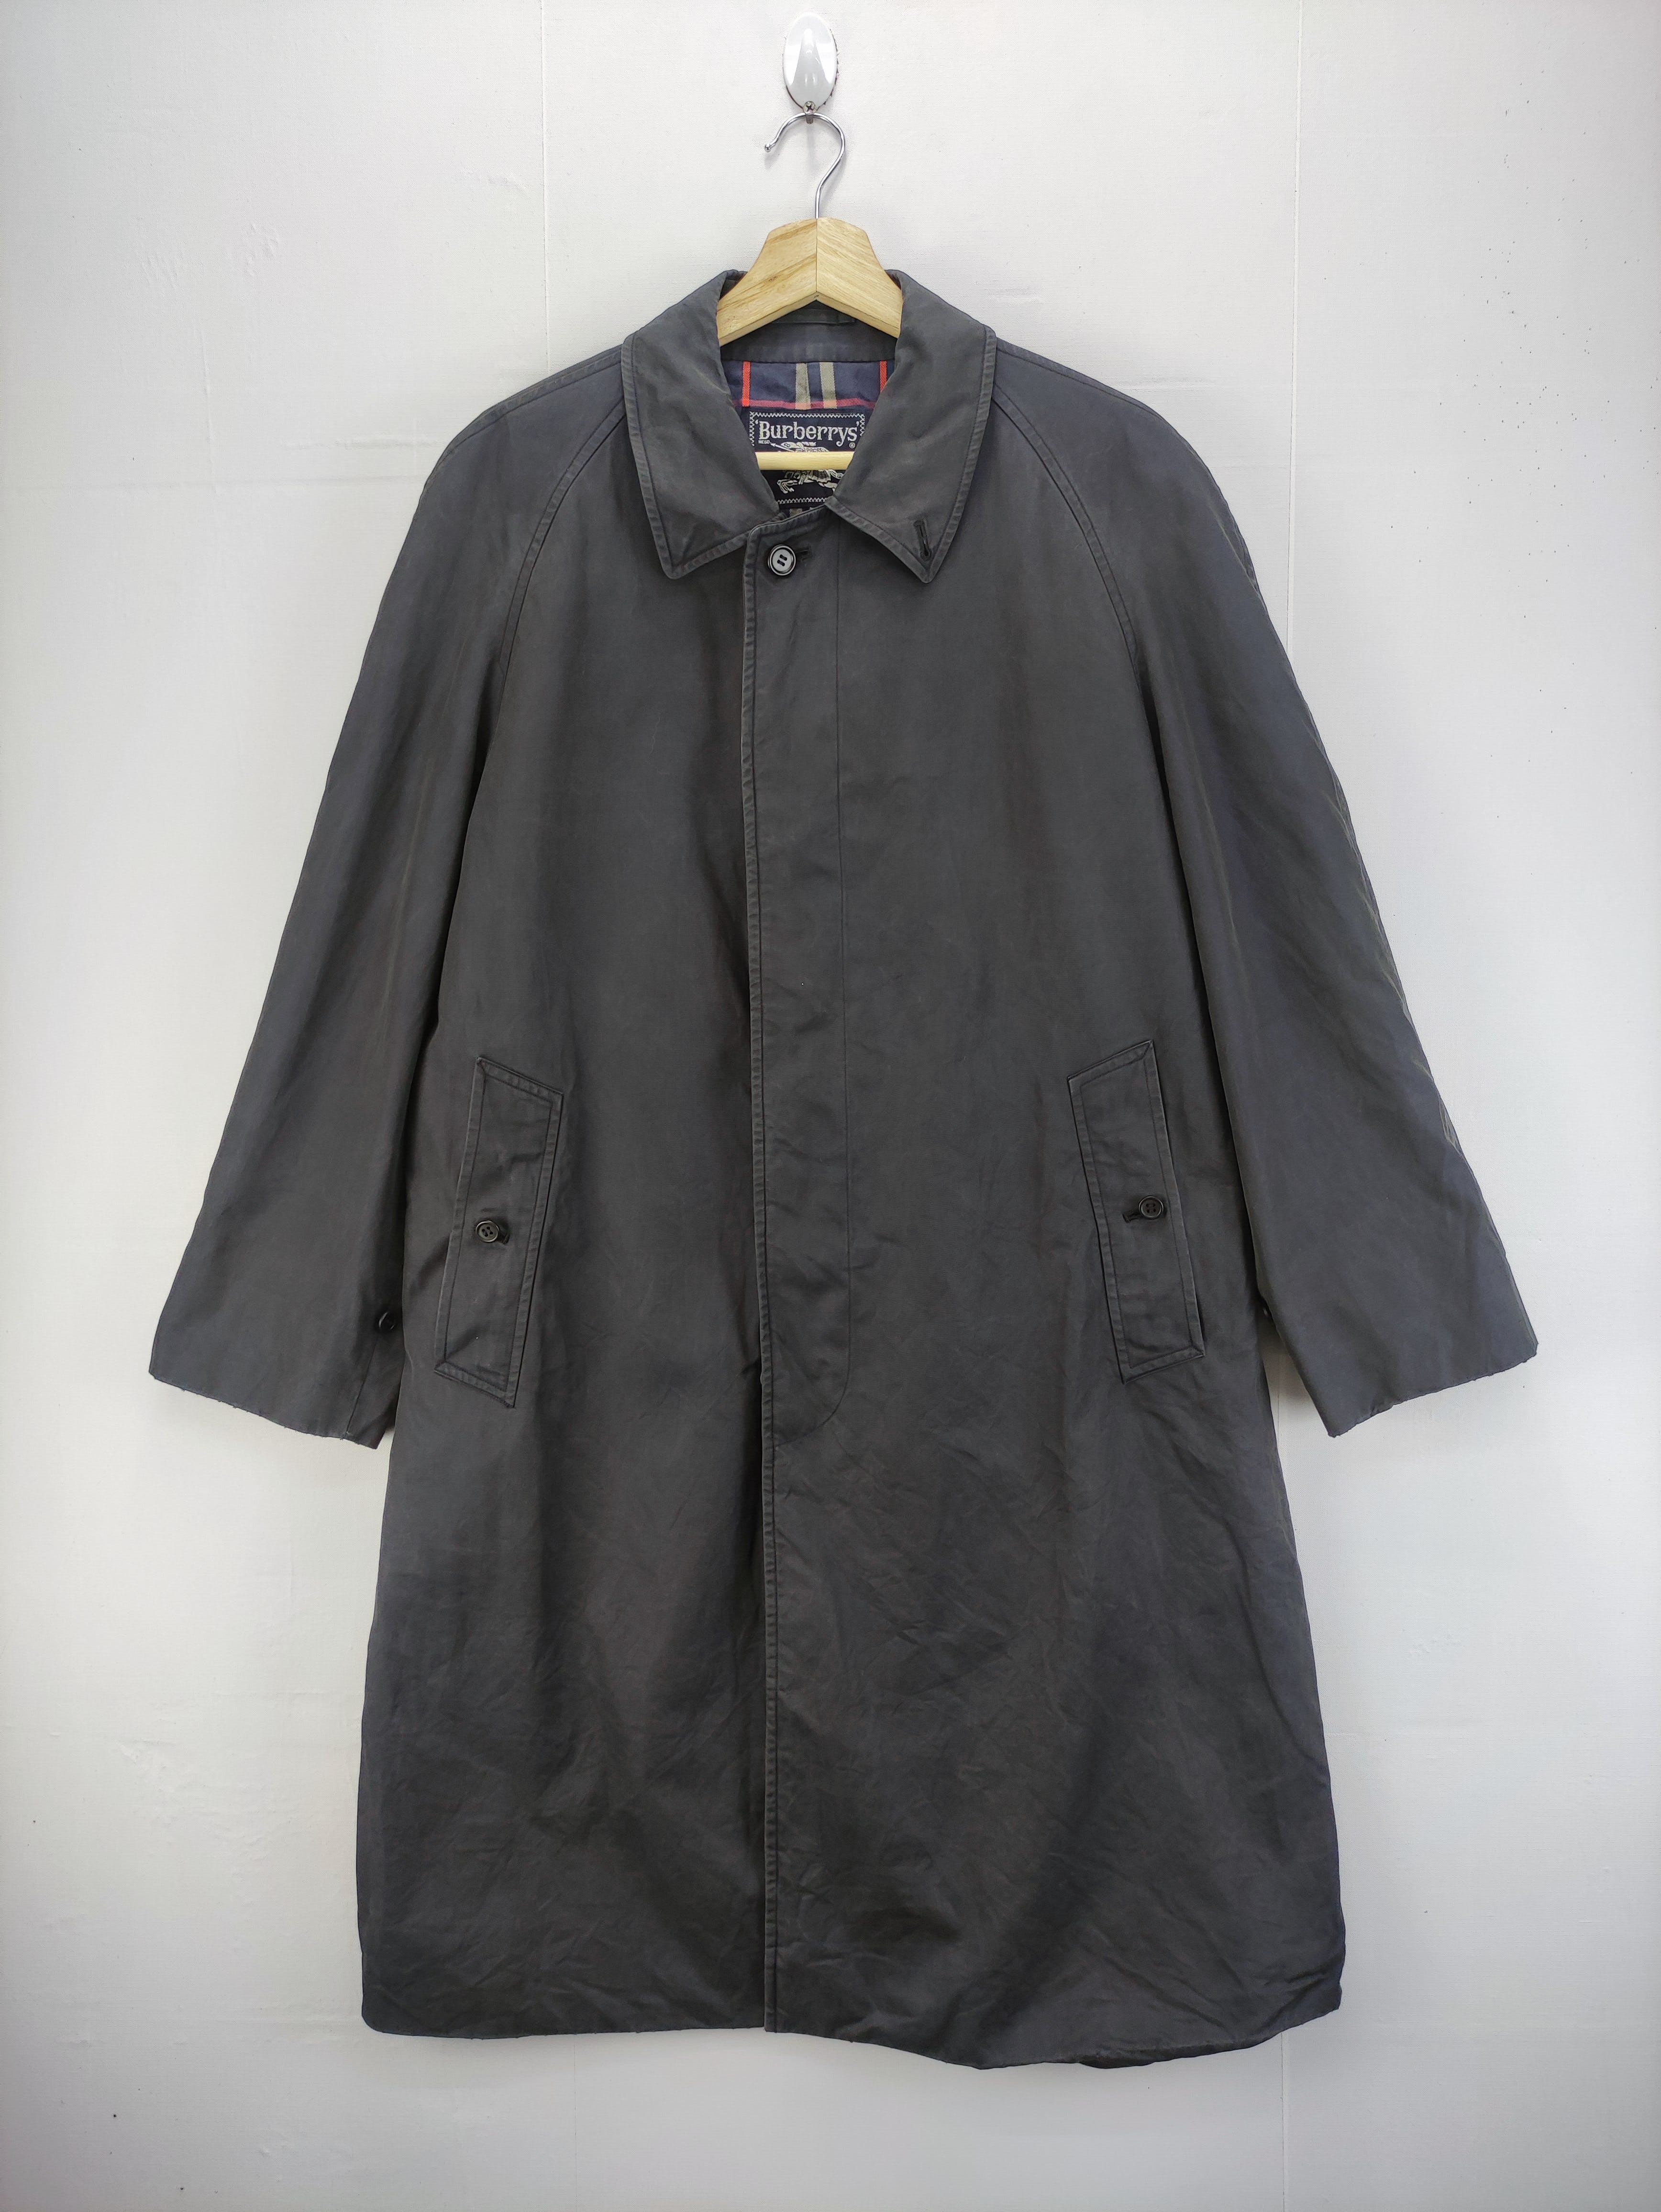 Vintage Burberrys Trench Coat Long Jacket - 1